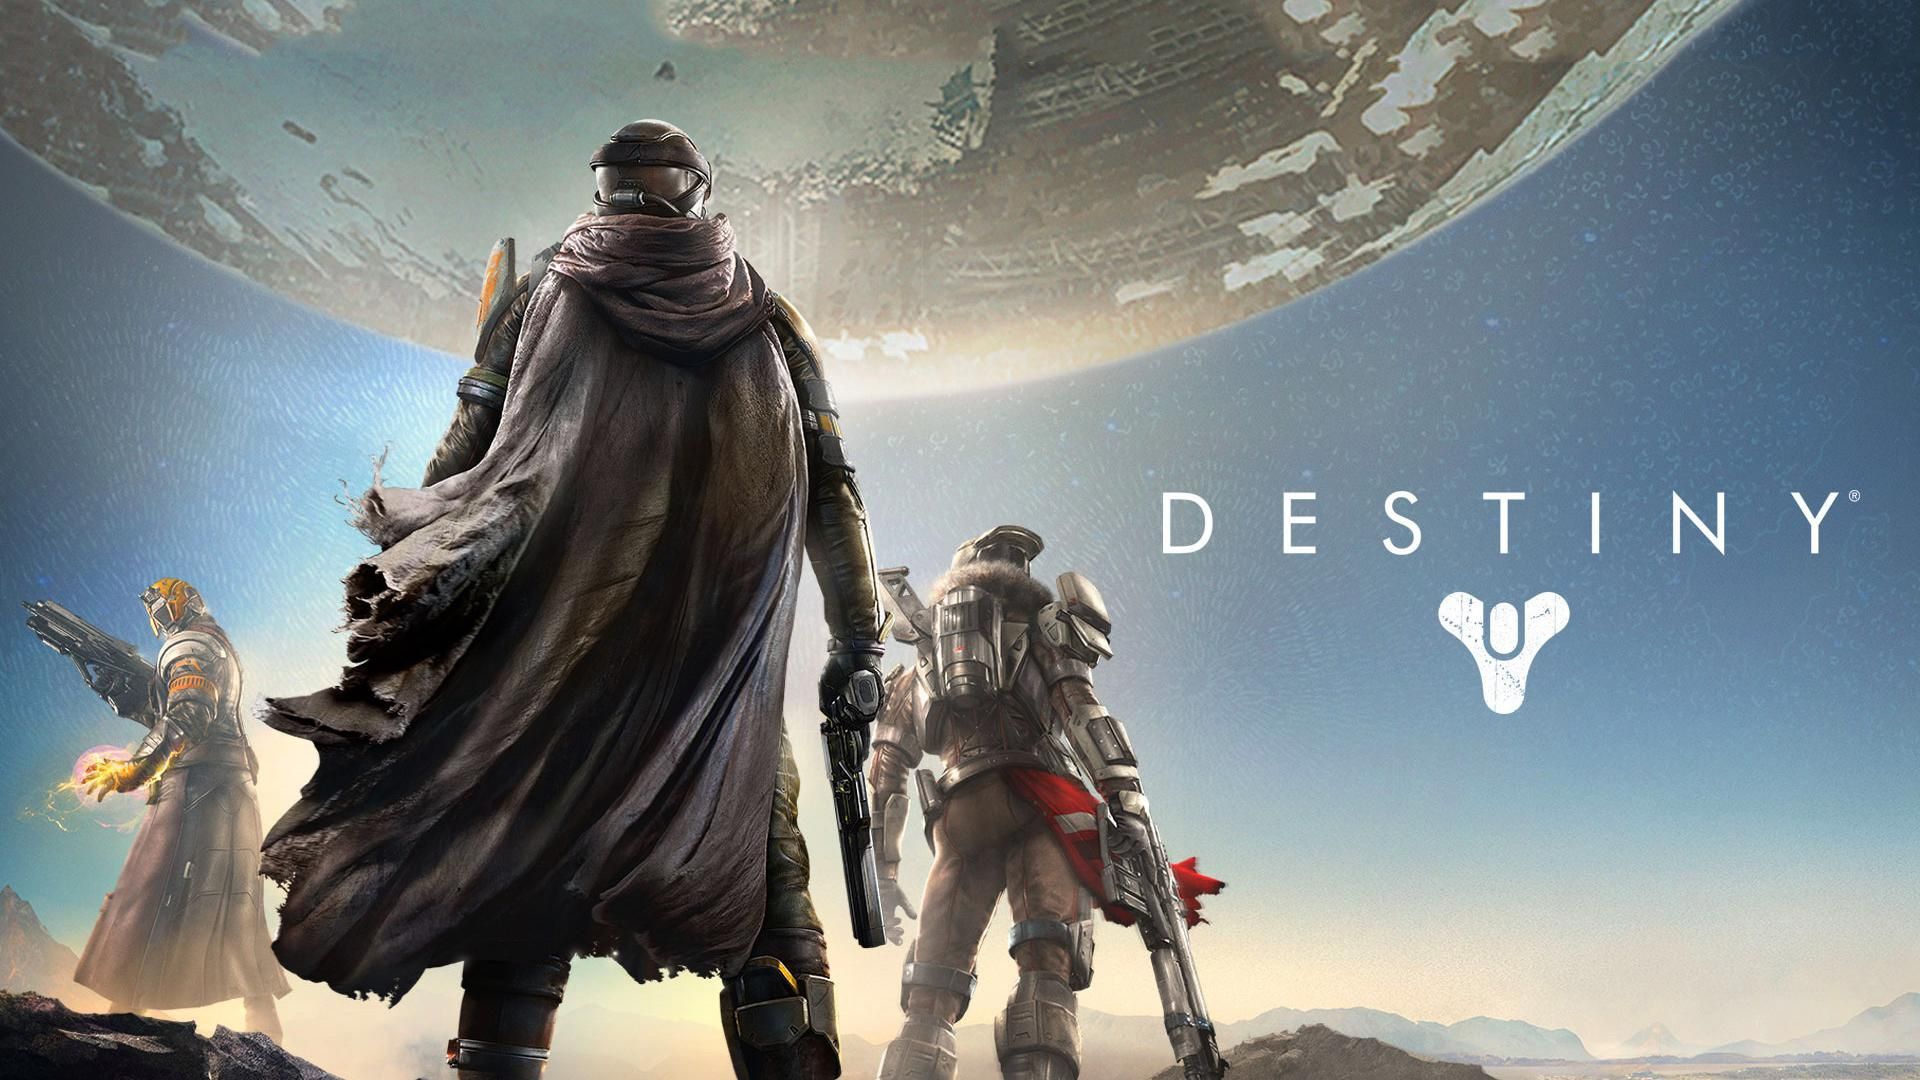 Автори гри Destiny покидають компанію Activision: причини